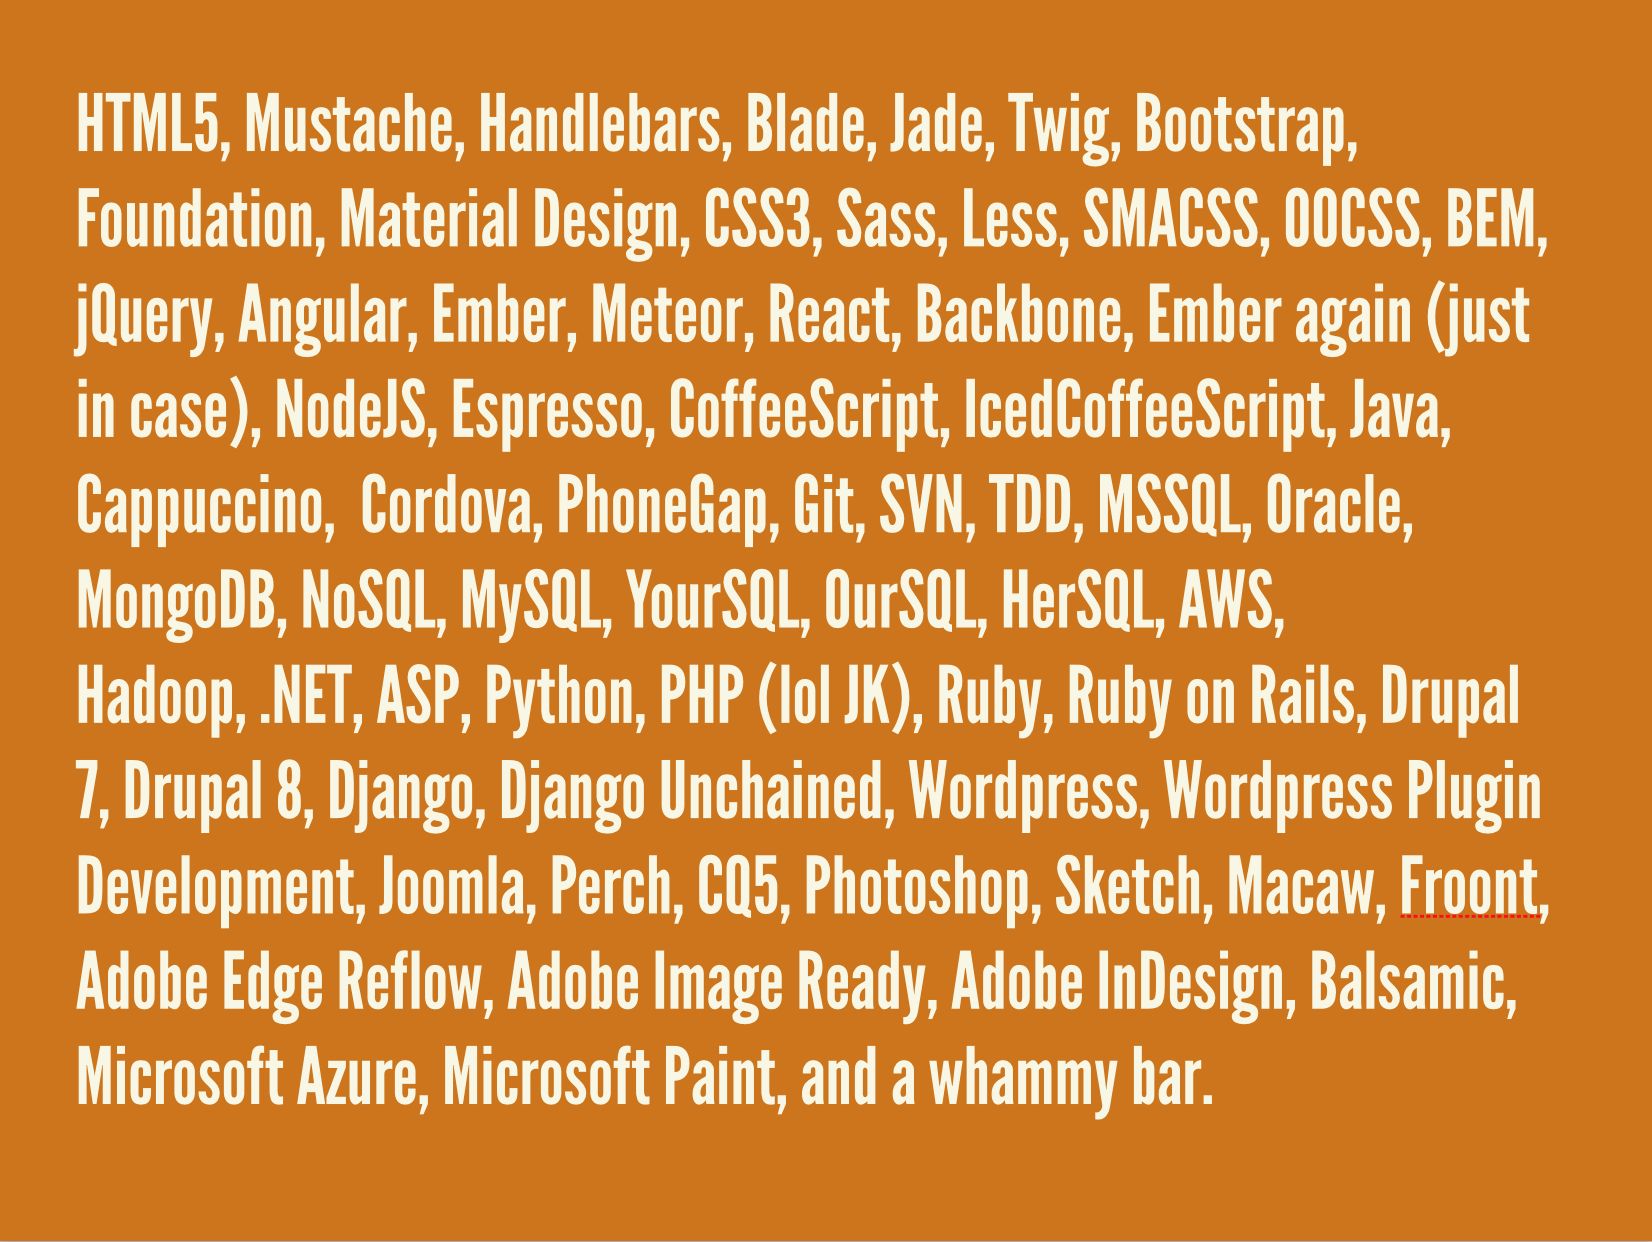 HTML5, Mustache, Handlebars, Blade, Jade, Twig, Bootstrap, Foundation, Material Design, CSS3, Sass, Less, SMACSS, OOCSS, BEM, jQuery, Angular, Ember, Meteor, React, Backbone, Ember again (just in case), NodeJS, Espresso, CoffeeScript, IcedCoffeeScript, Java, Cappuccino, Cordova, PhoneGap, Git, SVN, TDD, MSSQL, Oracle, MongoDB, NoSQL, MySQL, YourSQL, OurSQL, HerSQL, AWS, Hadoop, .NET, ASP, Python, PHP (lol JK), Ruby, Ruby on Rails, Drupal 7, Drupal 8, Django, Django Unchained, WordPress, WordPress Plugin Development, Joomla, Perch, CQ5, Photoshop, Sketch, Macaw, Froont, Adobe Edge Reflow, Adobe Image Ready, Adobe InDesign, Balsamic, Microsoft Azure, Microsoft Paint, and a whammy bar.